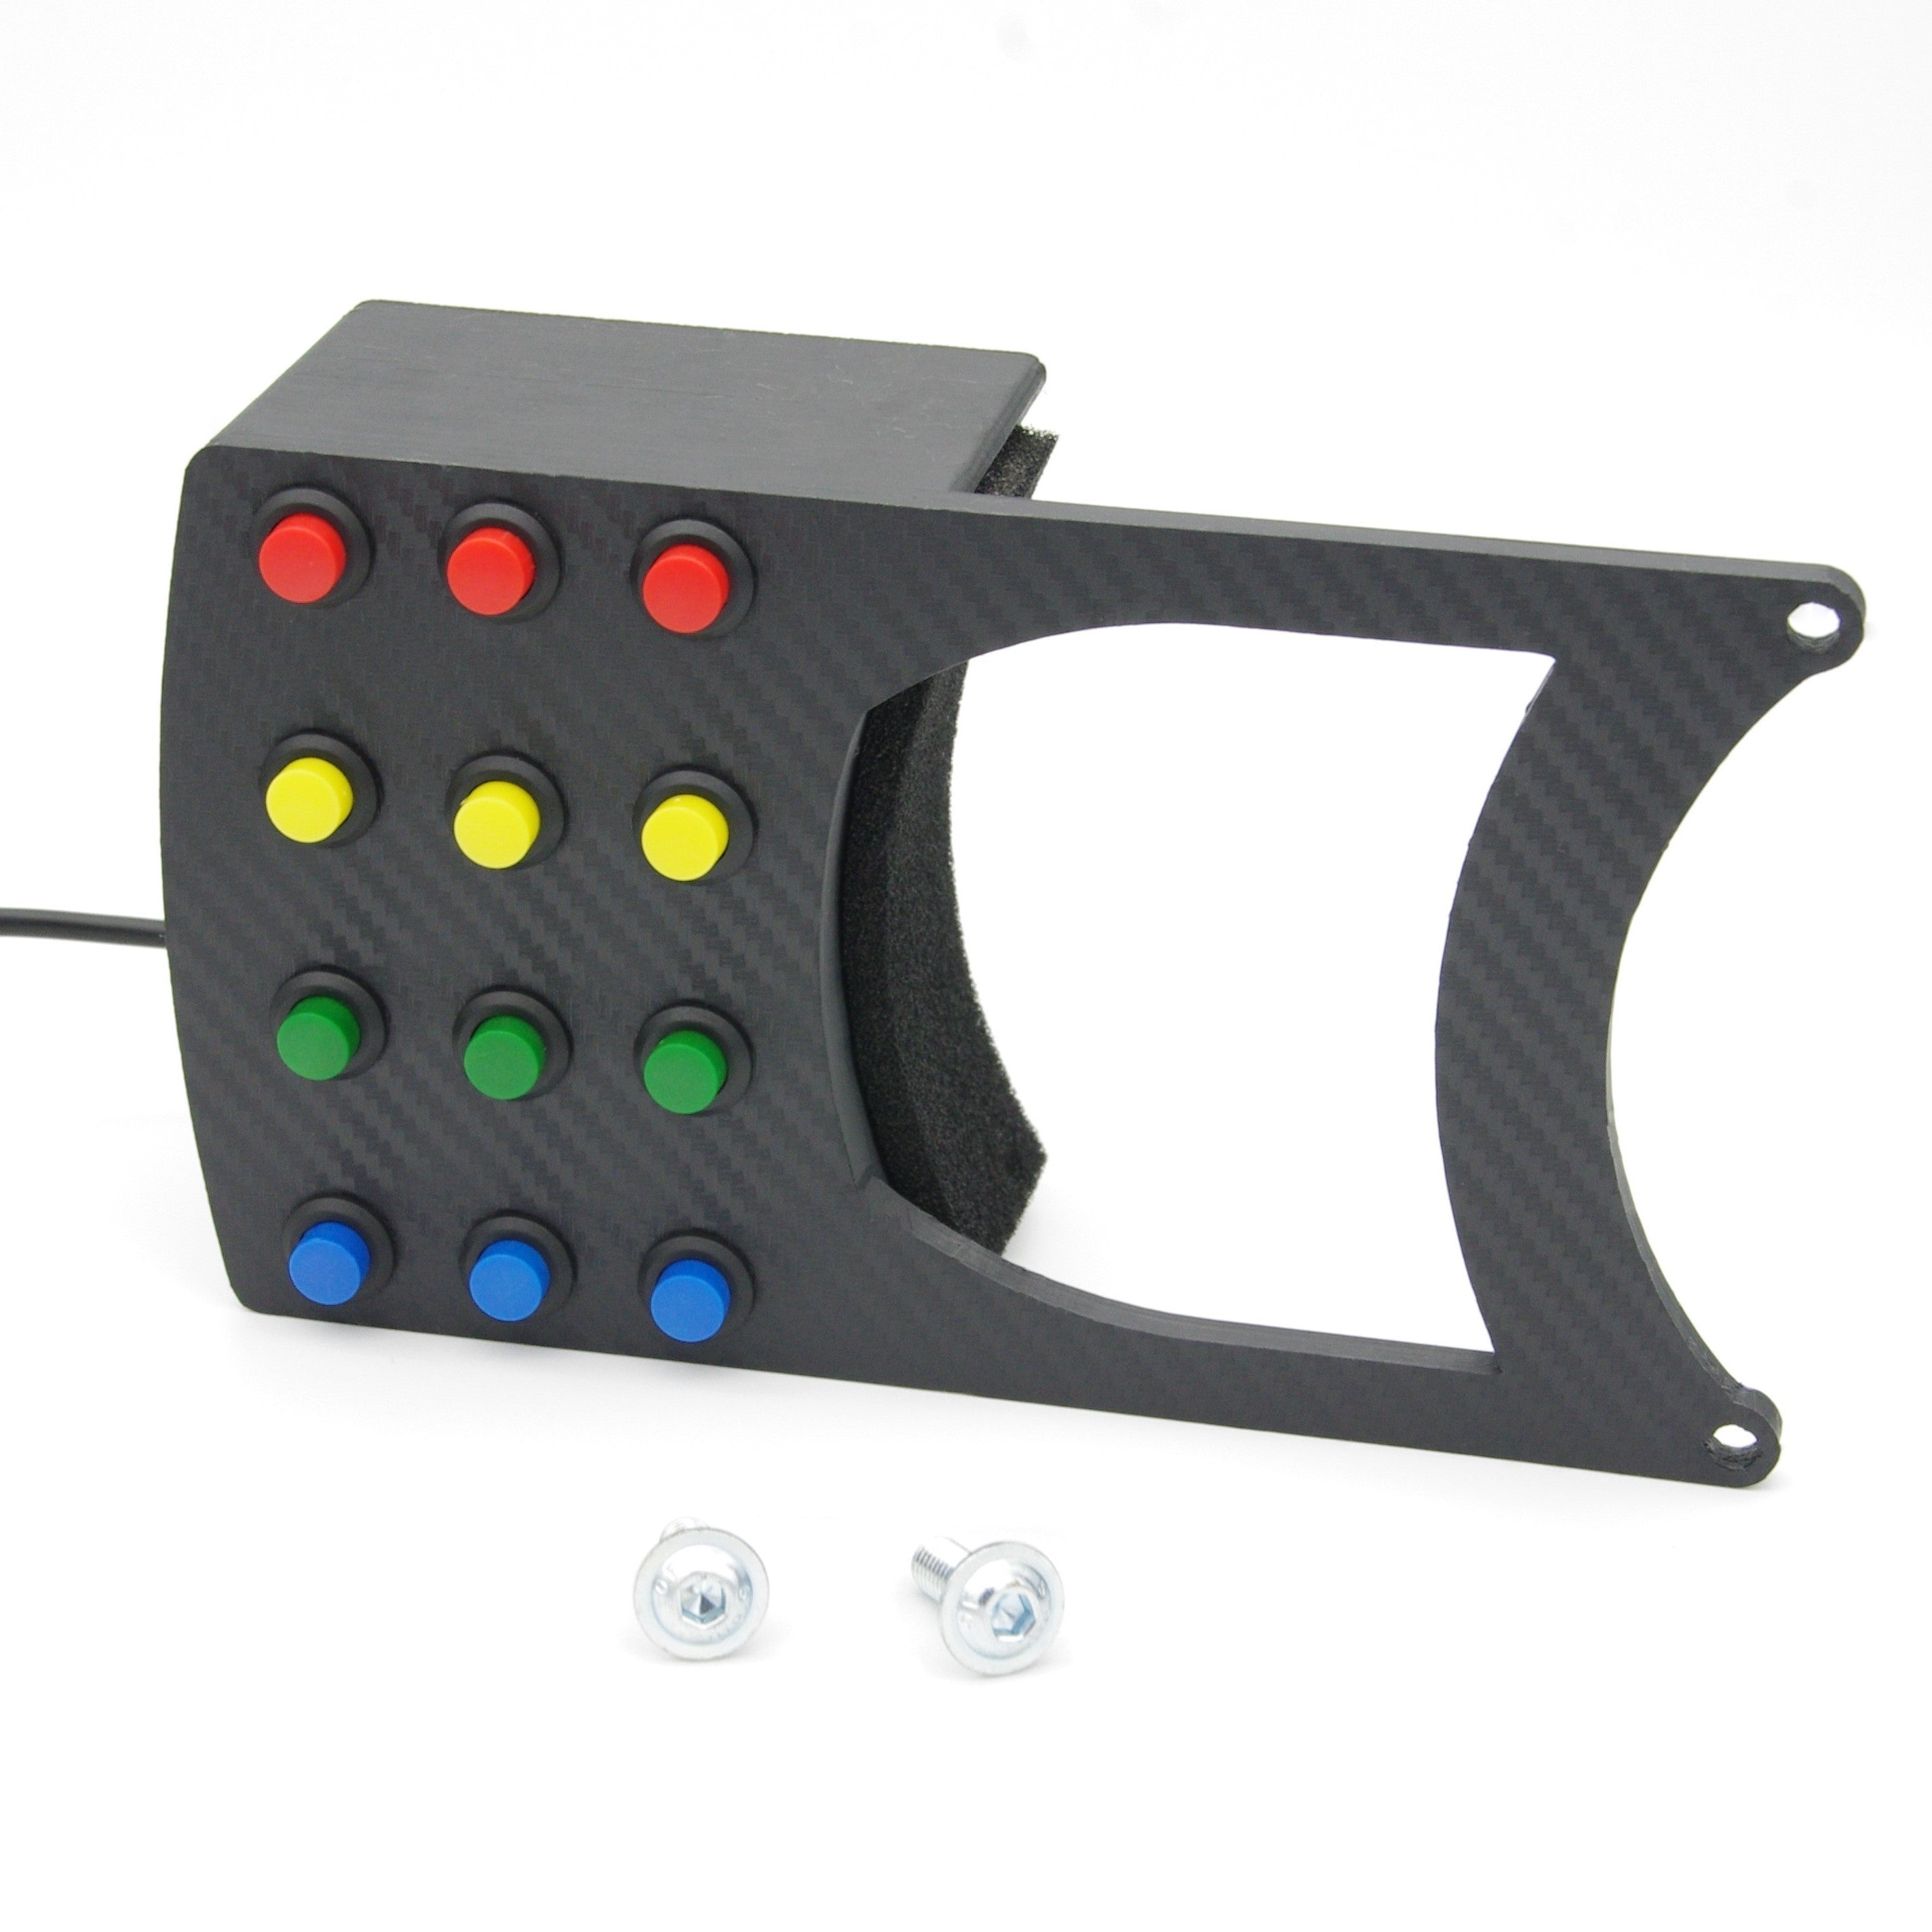 Fanatec CSL ELITE Button Box | Cup-P3 | Simracing Button Box